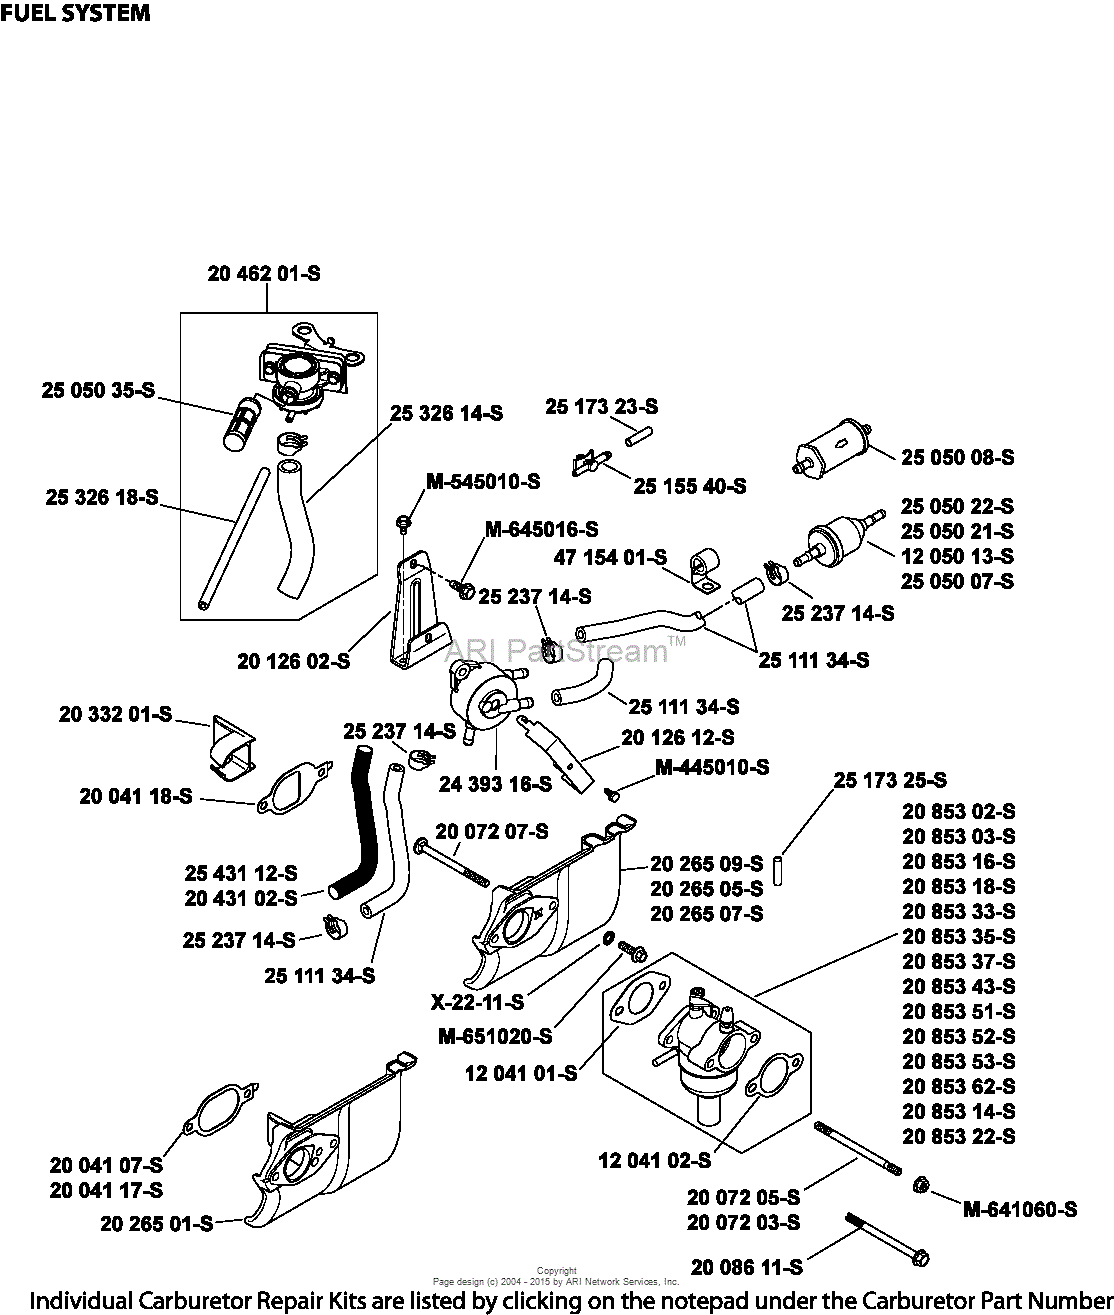 Wiring Manual PDF: 12 Hp Kohler Engine Diagram Wiring Schematic